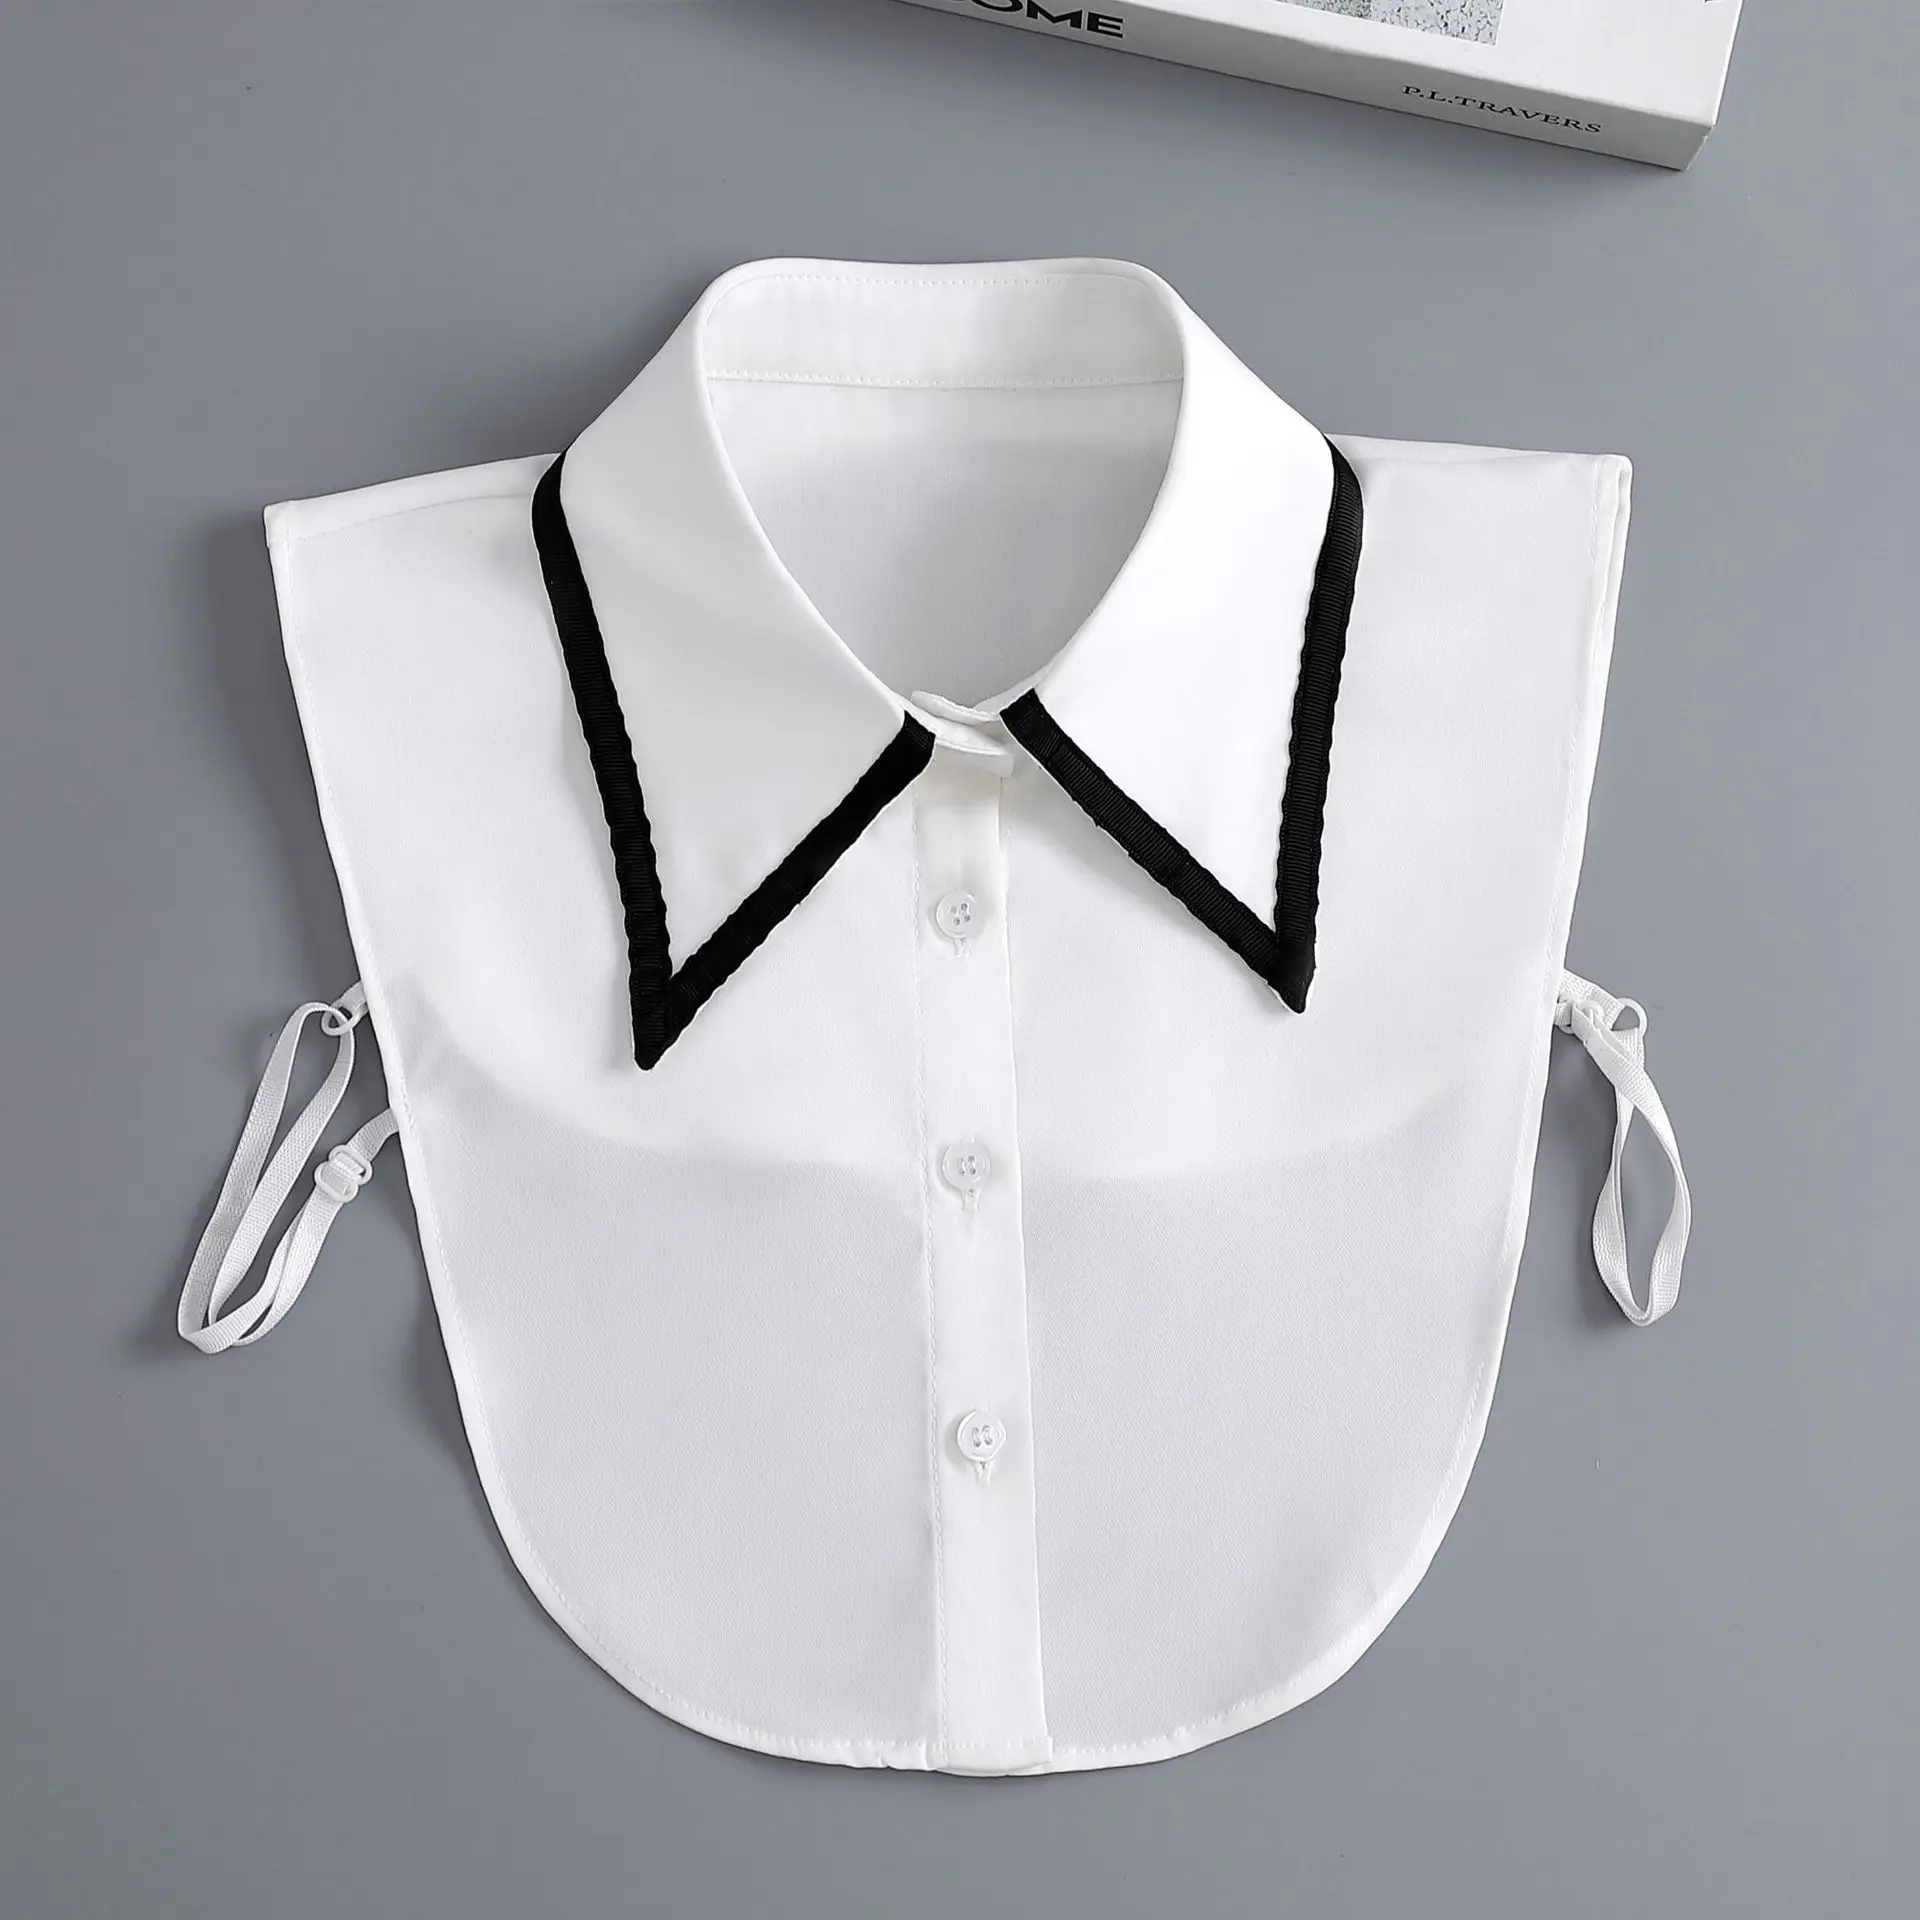 

Shirt Detachable Collar for Women White Fake Collar Removable Sweater Blouse Top Decorative Faux Cols Neckwear False Collar